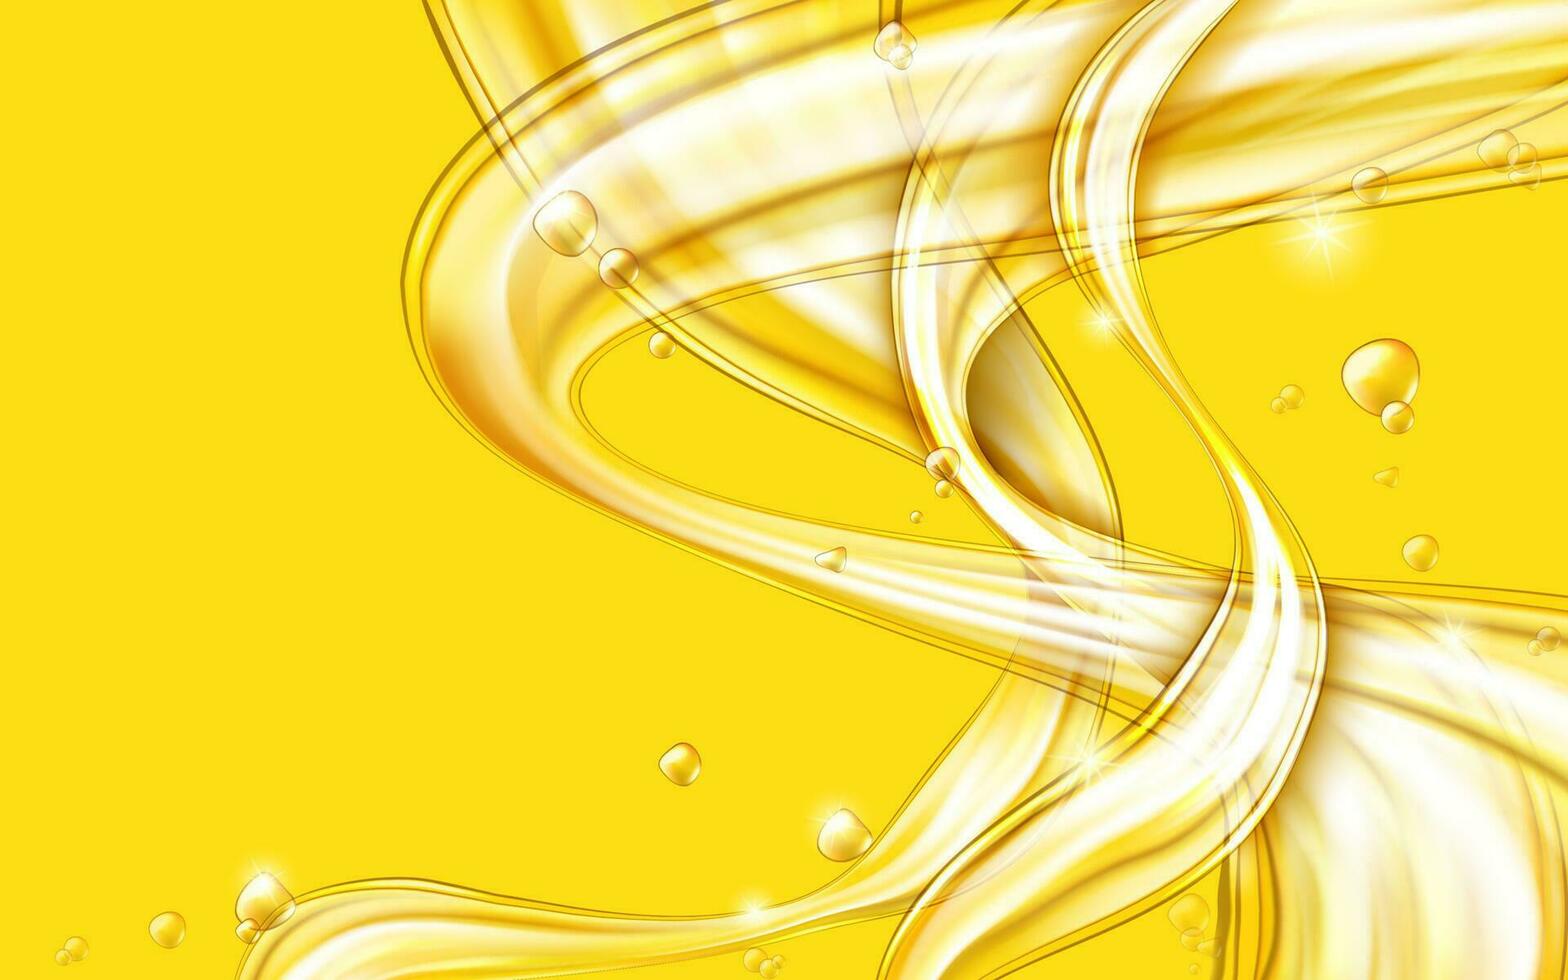 amarelo dourado fluindo líquido abstrato vetor